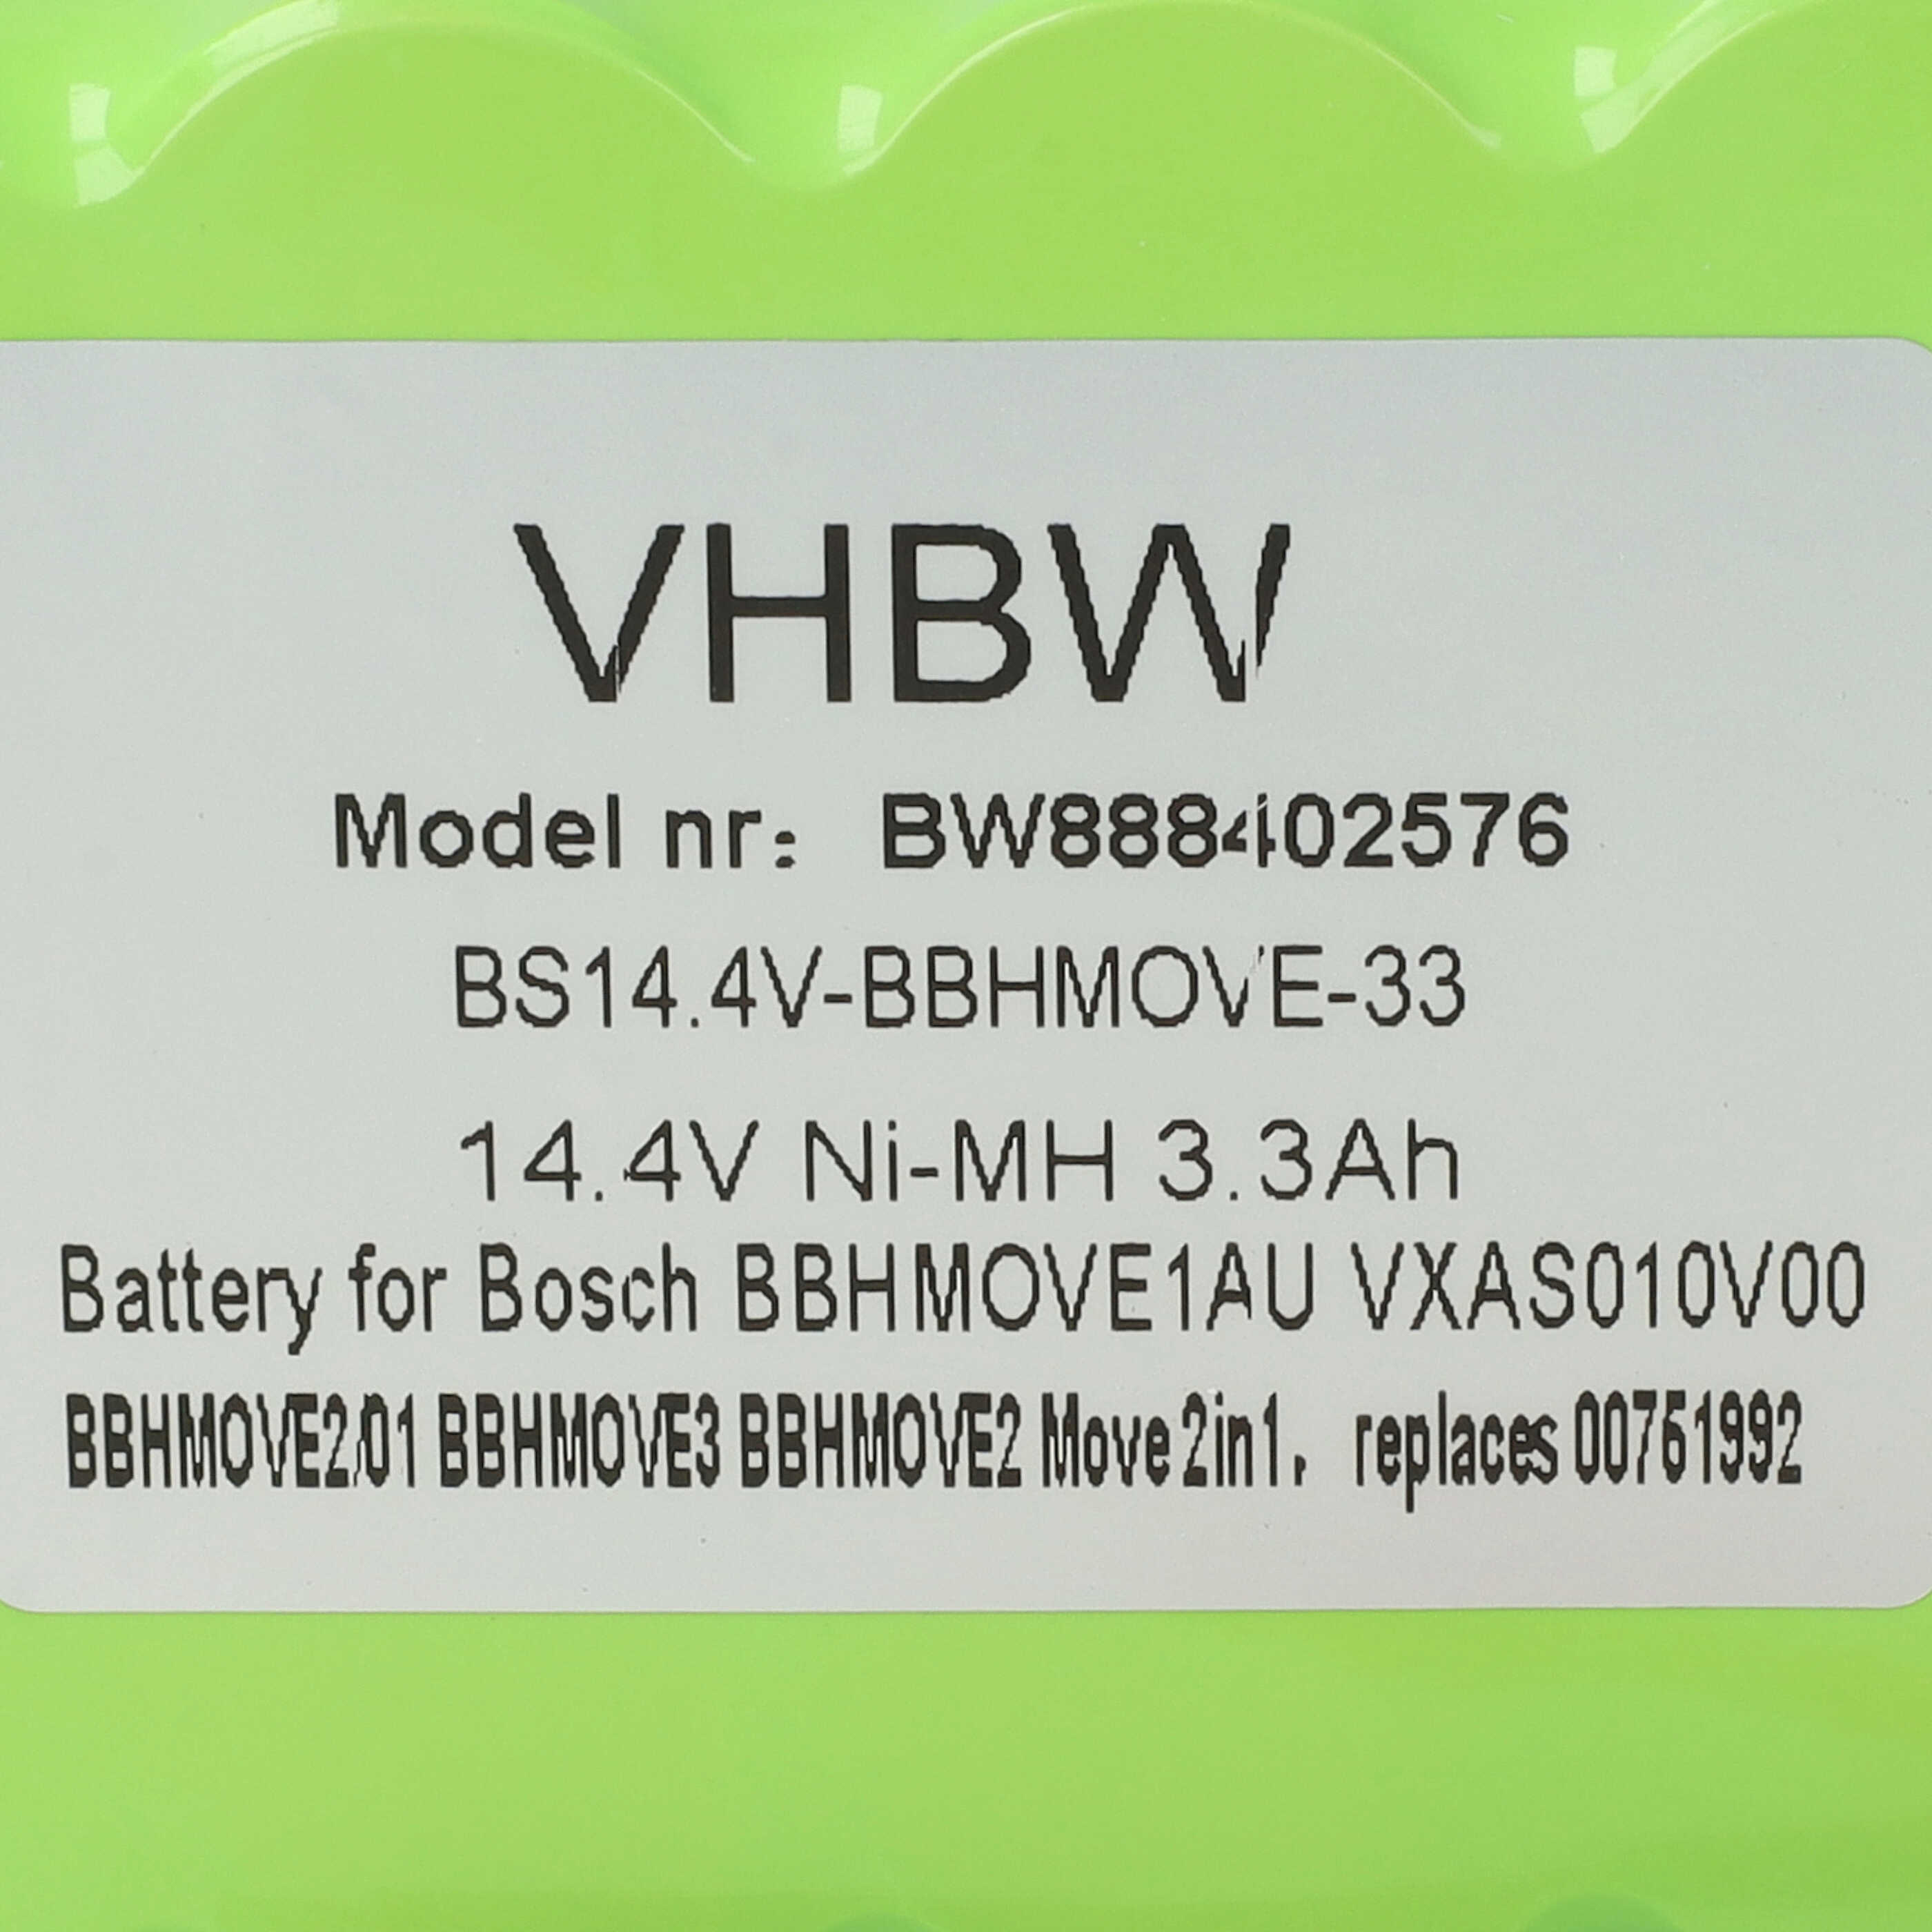 Akumulator do odkurzacza zamiennik Bosch FD8901, GP180SCHSV12Y2H, 00751992 - 3300 mAh 14,4 V NiMH